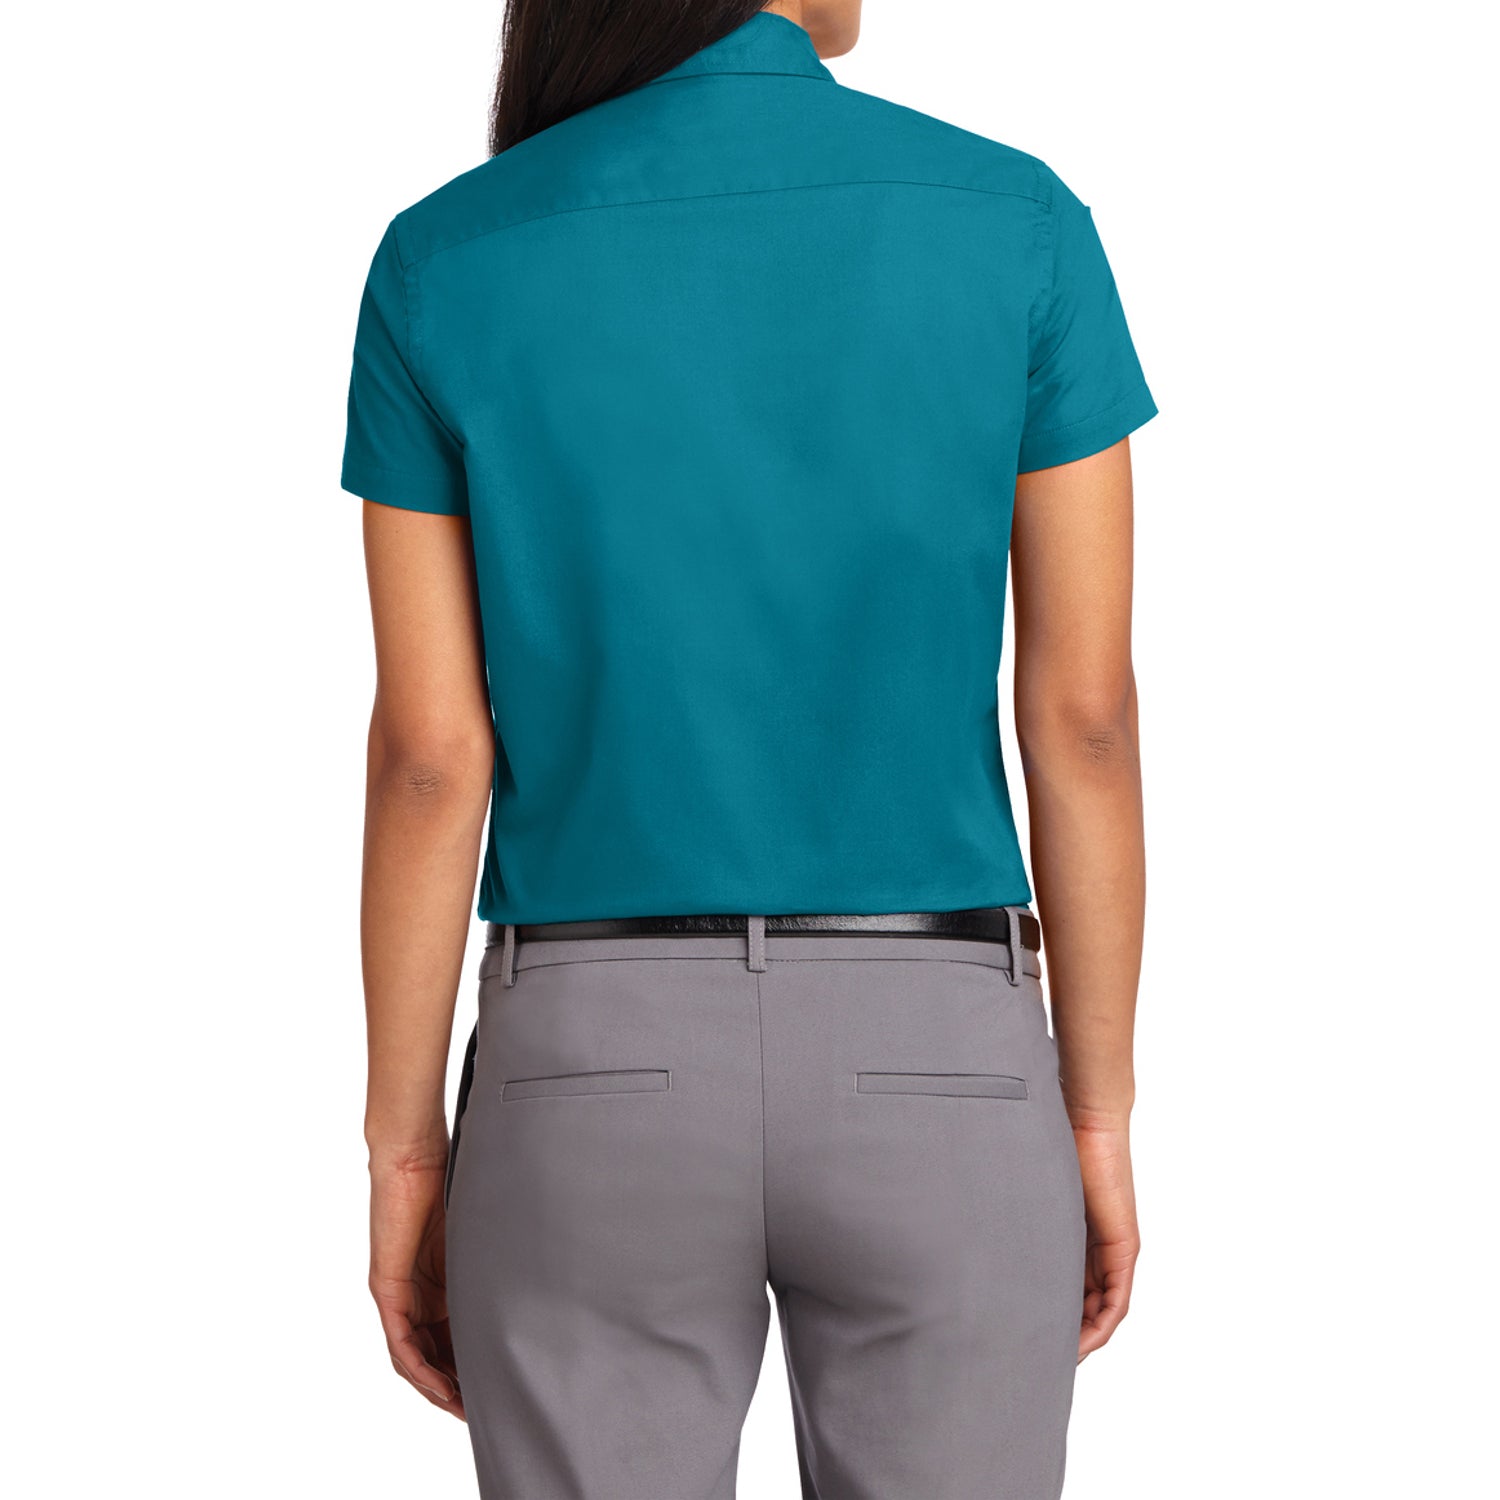 Mafoose Women's Comfortable Short Sleeve Easy Care Shirt Teal Green-Back